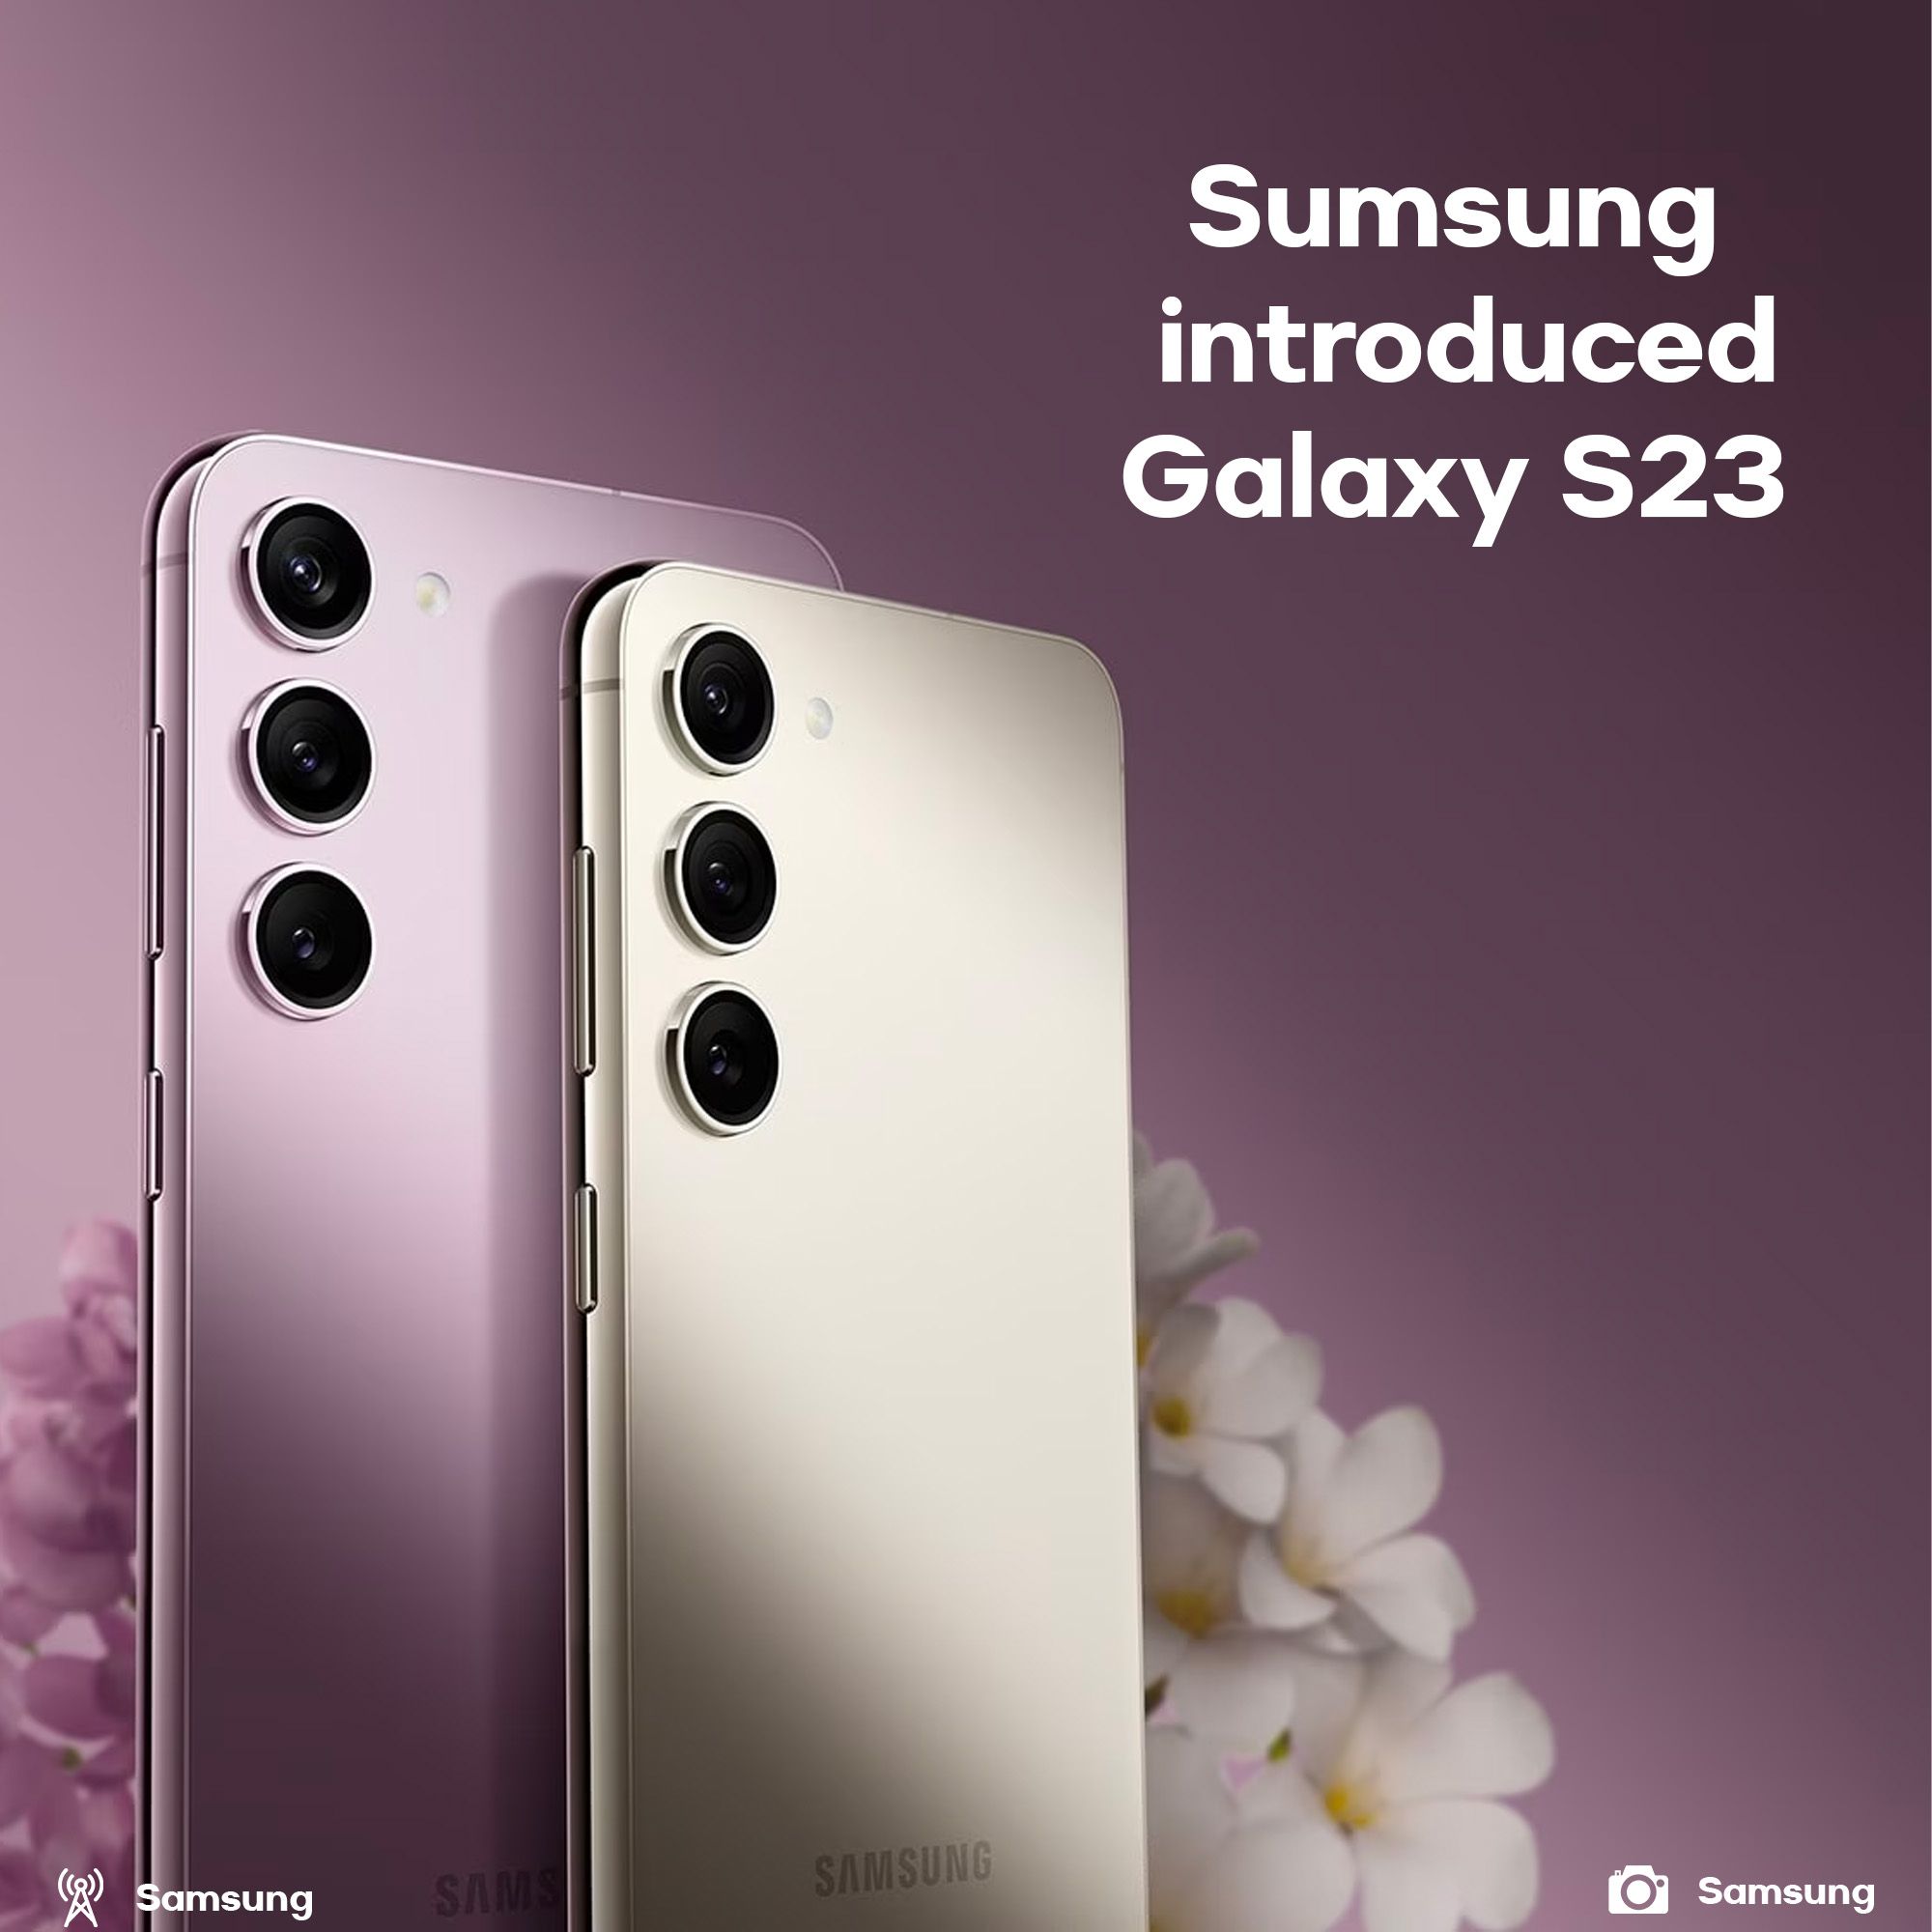 Samsung introduced Galaxy S23